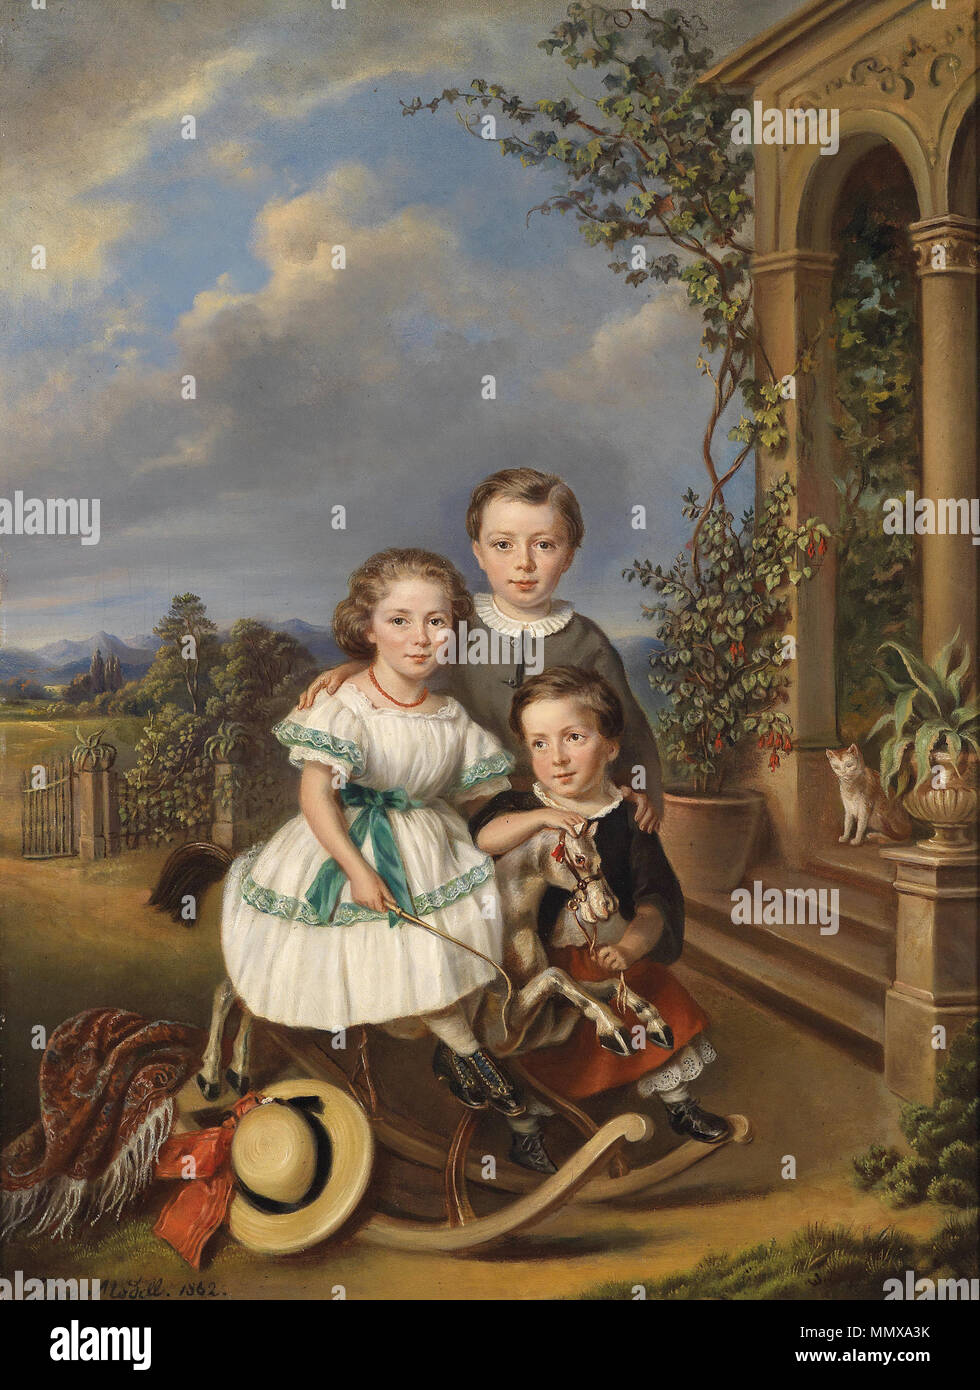 Elisabeth Modell Porträts dreier Kinder vor einem Gartenpavillon Stock Photo